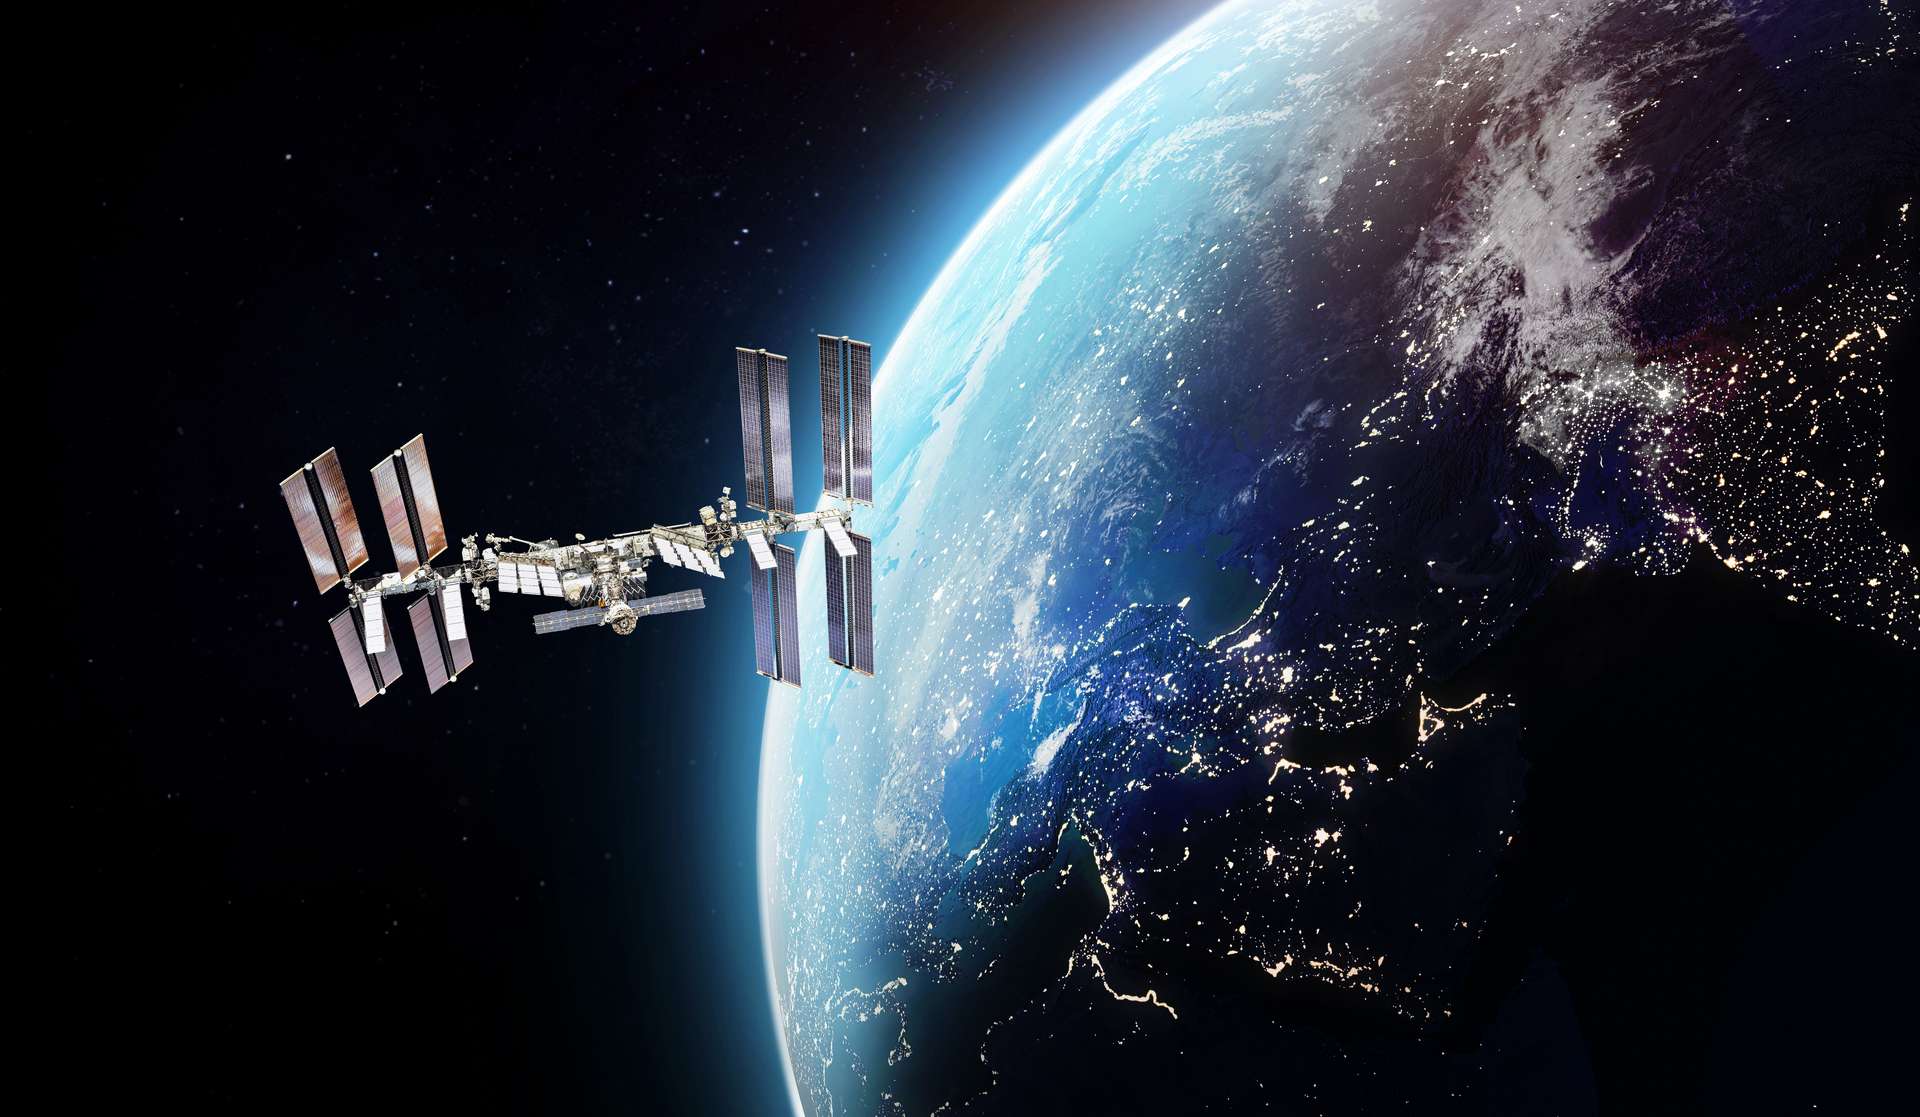 La Station spatiale internationale en orbite autour de la Terre. © dimazel, Adobe Stock